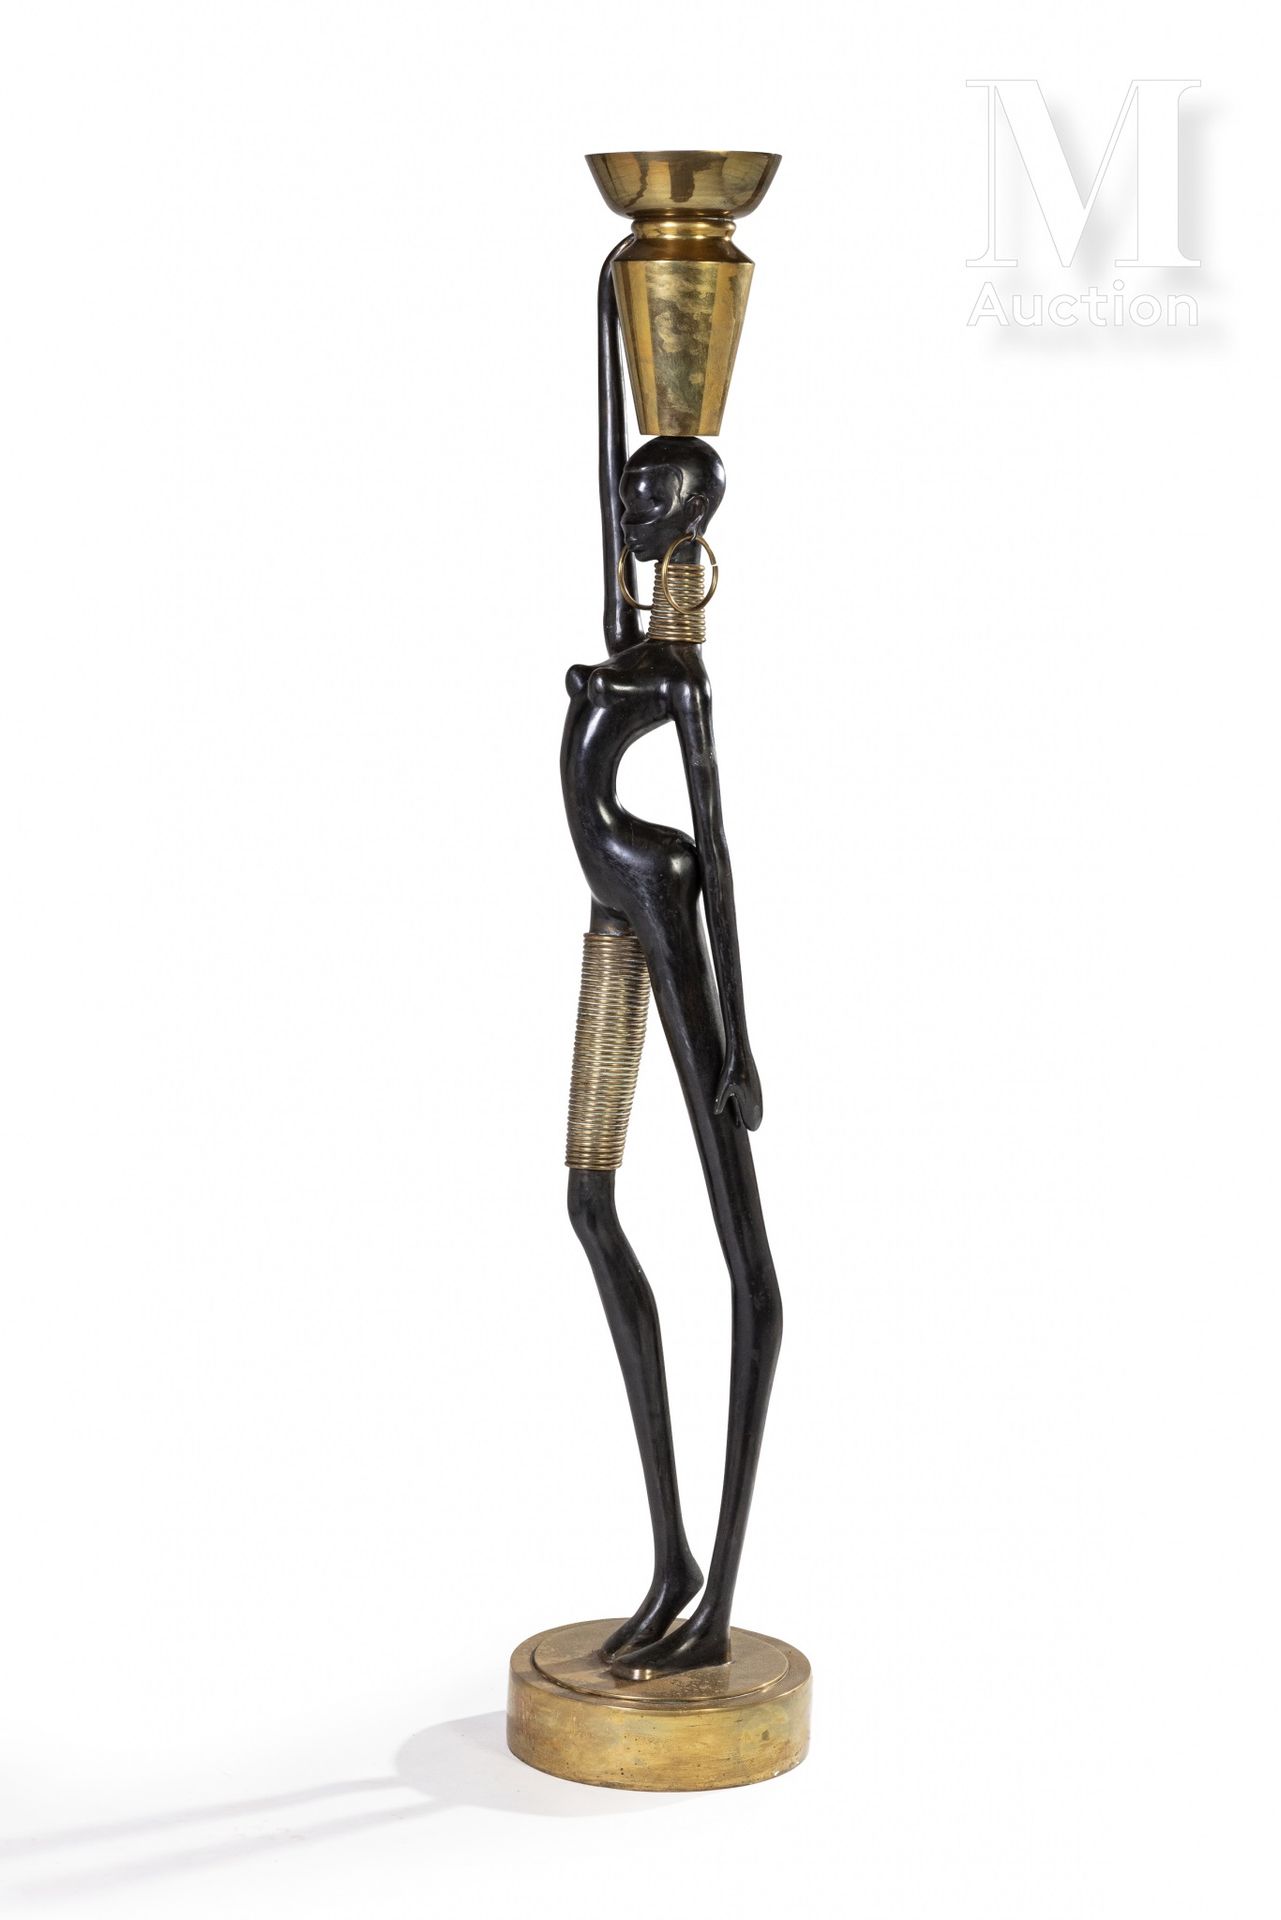 Dans le style de Karl HAGENAUER Mujer jirafa

Escultura de metal con pátina oscu&hellip;